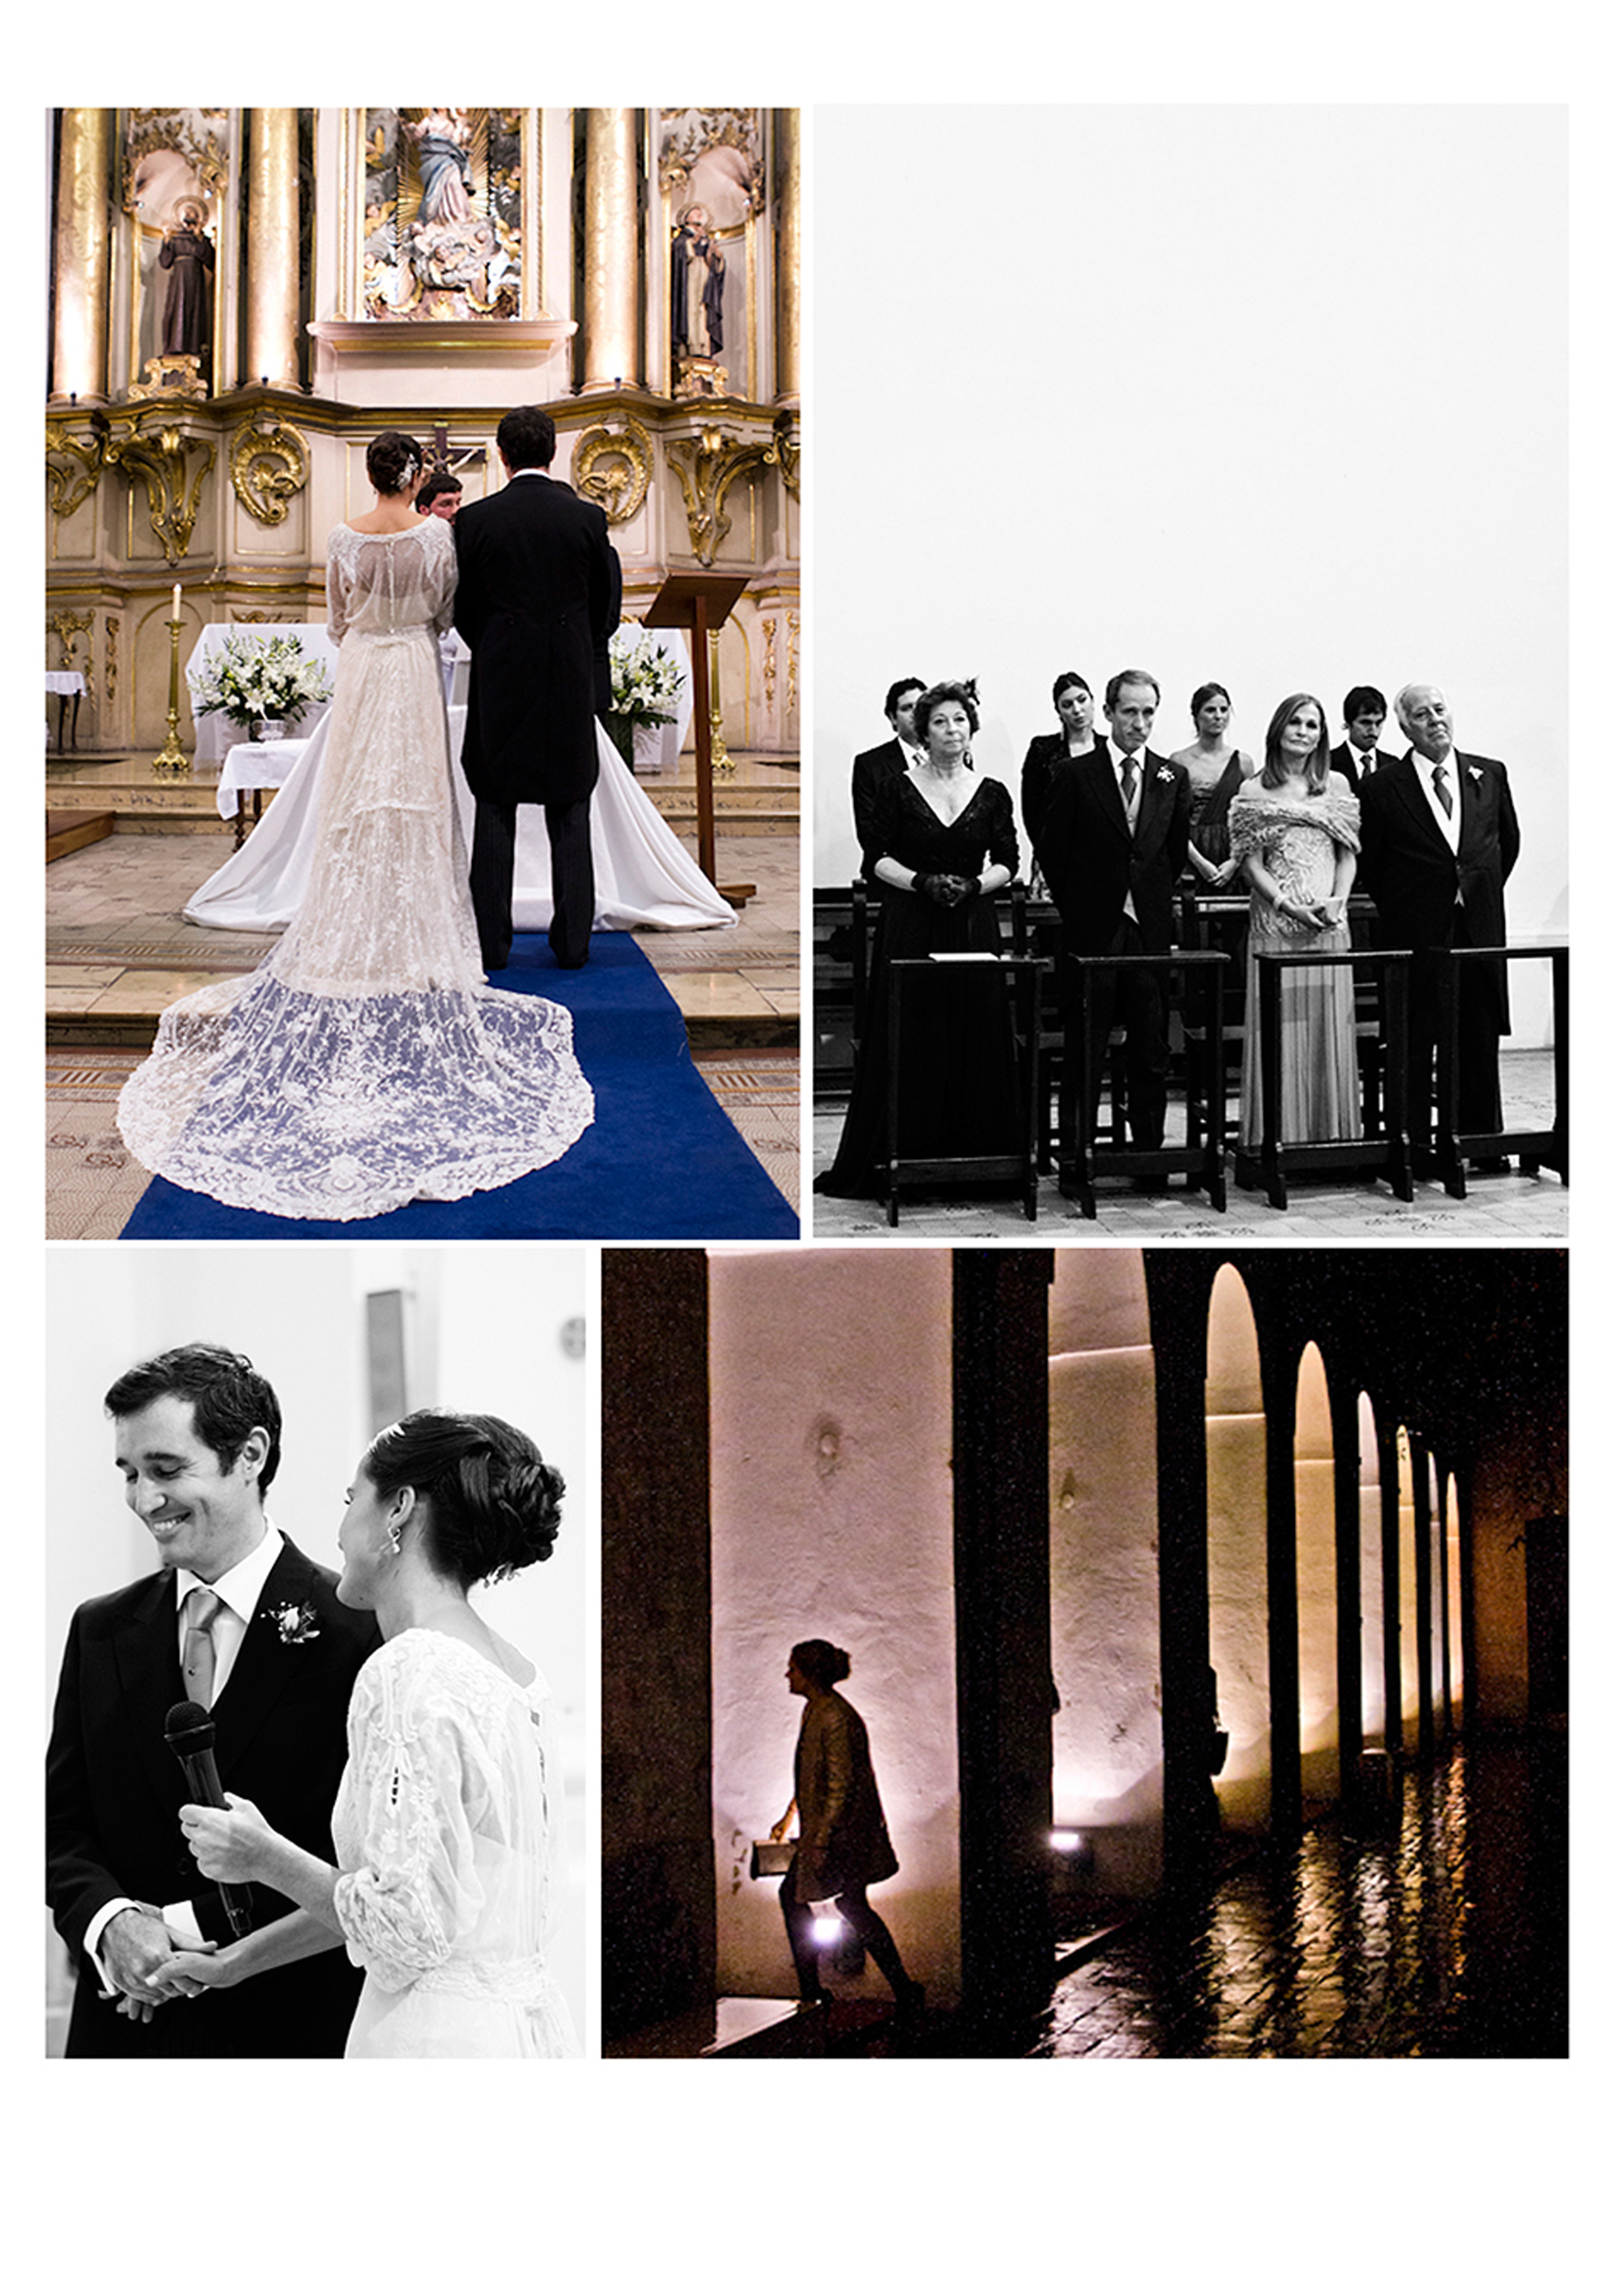 Gabriela Vigon-fotografa-fotografía-de-casamiento-yacht-club-puerto-madero-fotografo-bodas (4)